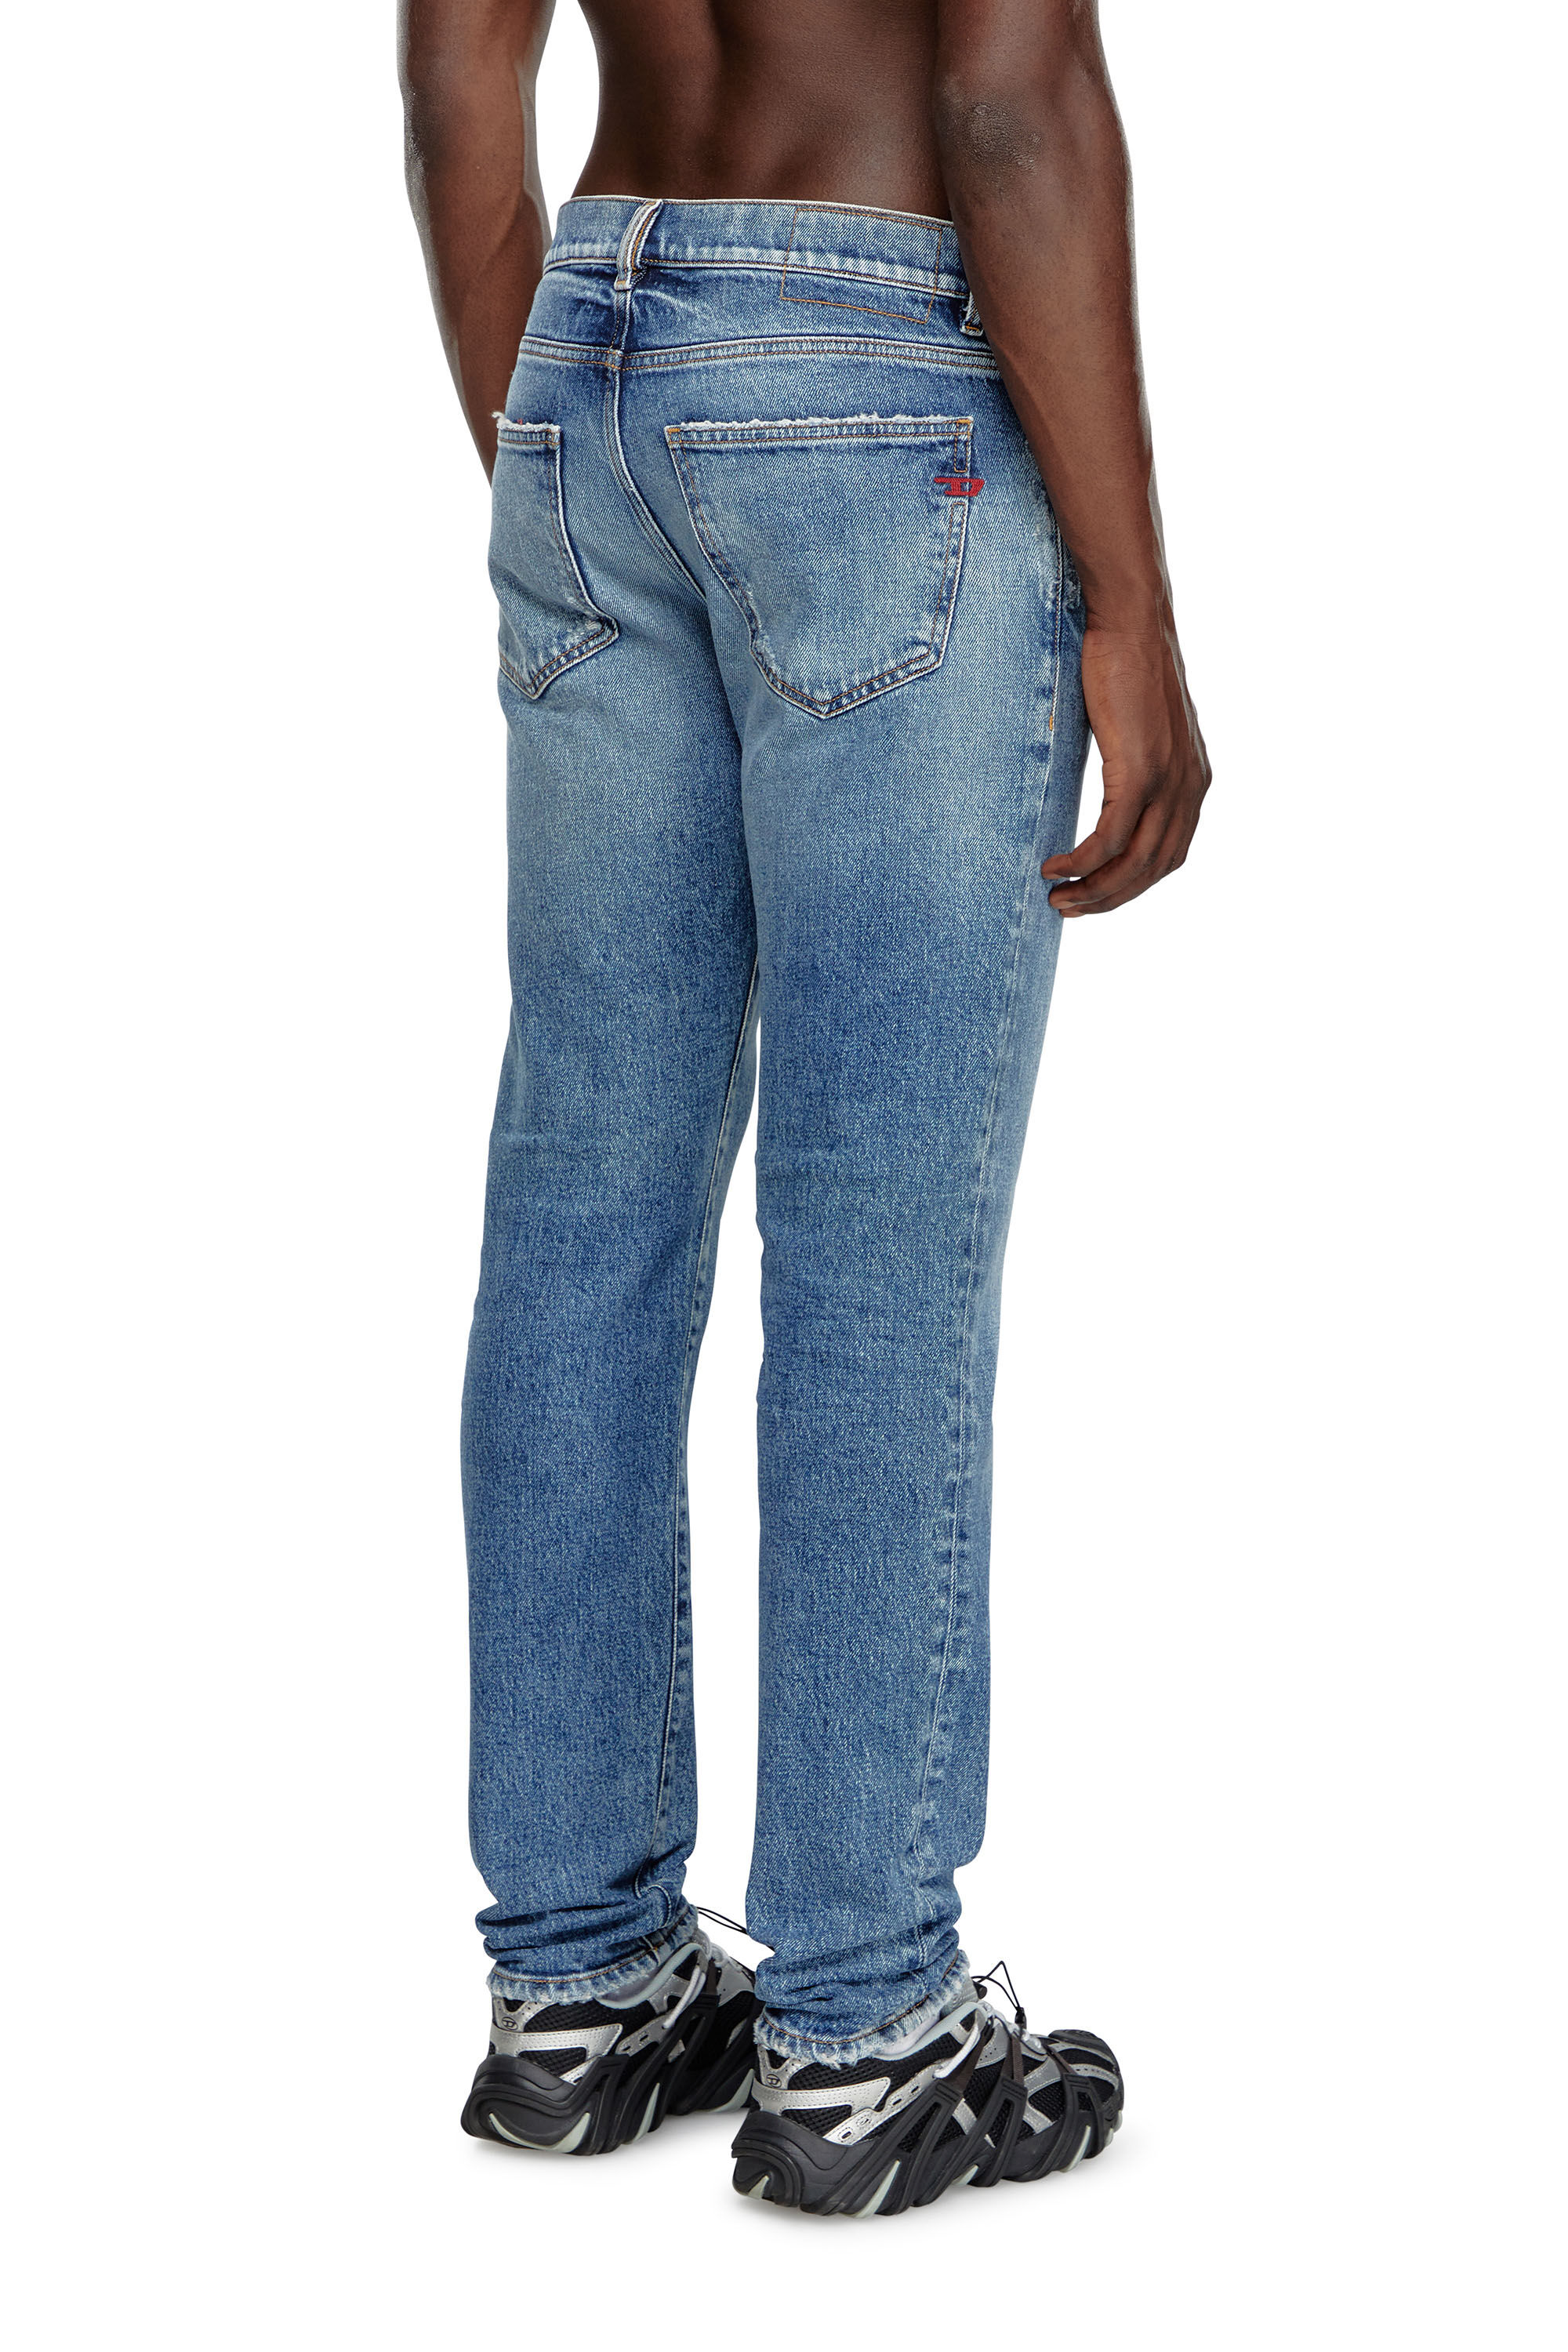 Diesel - Slim Jeans 2019 D-Strukt 09F16, Hombre Slim Jeans - 2019 D-Strukt in Azul marino - Image 4